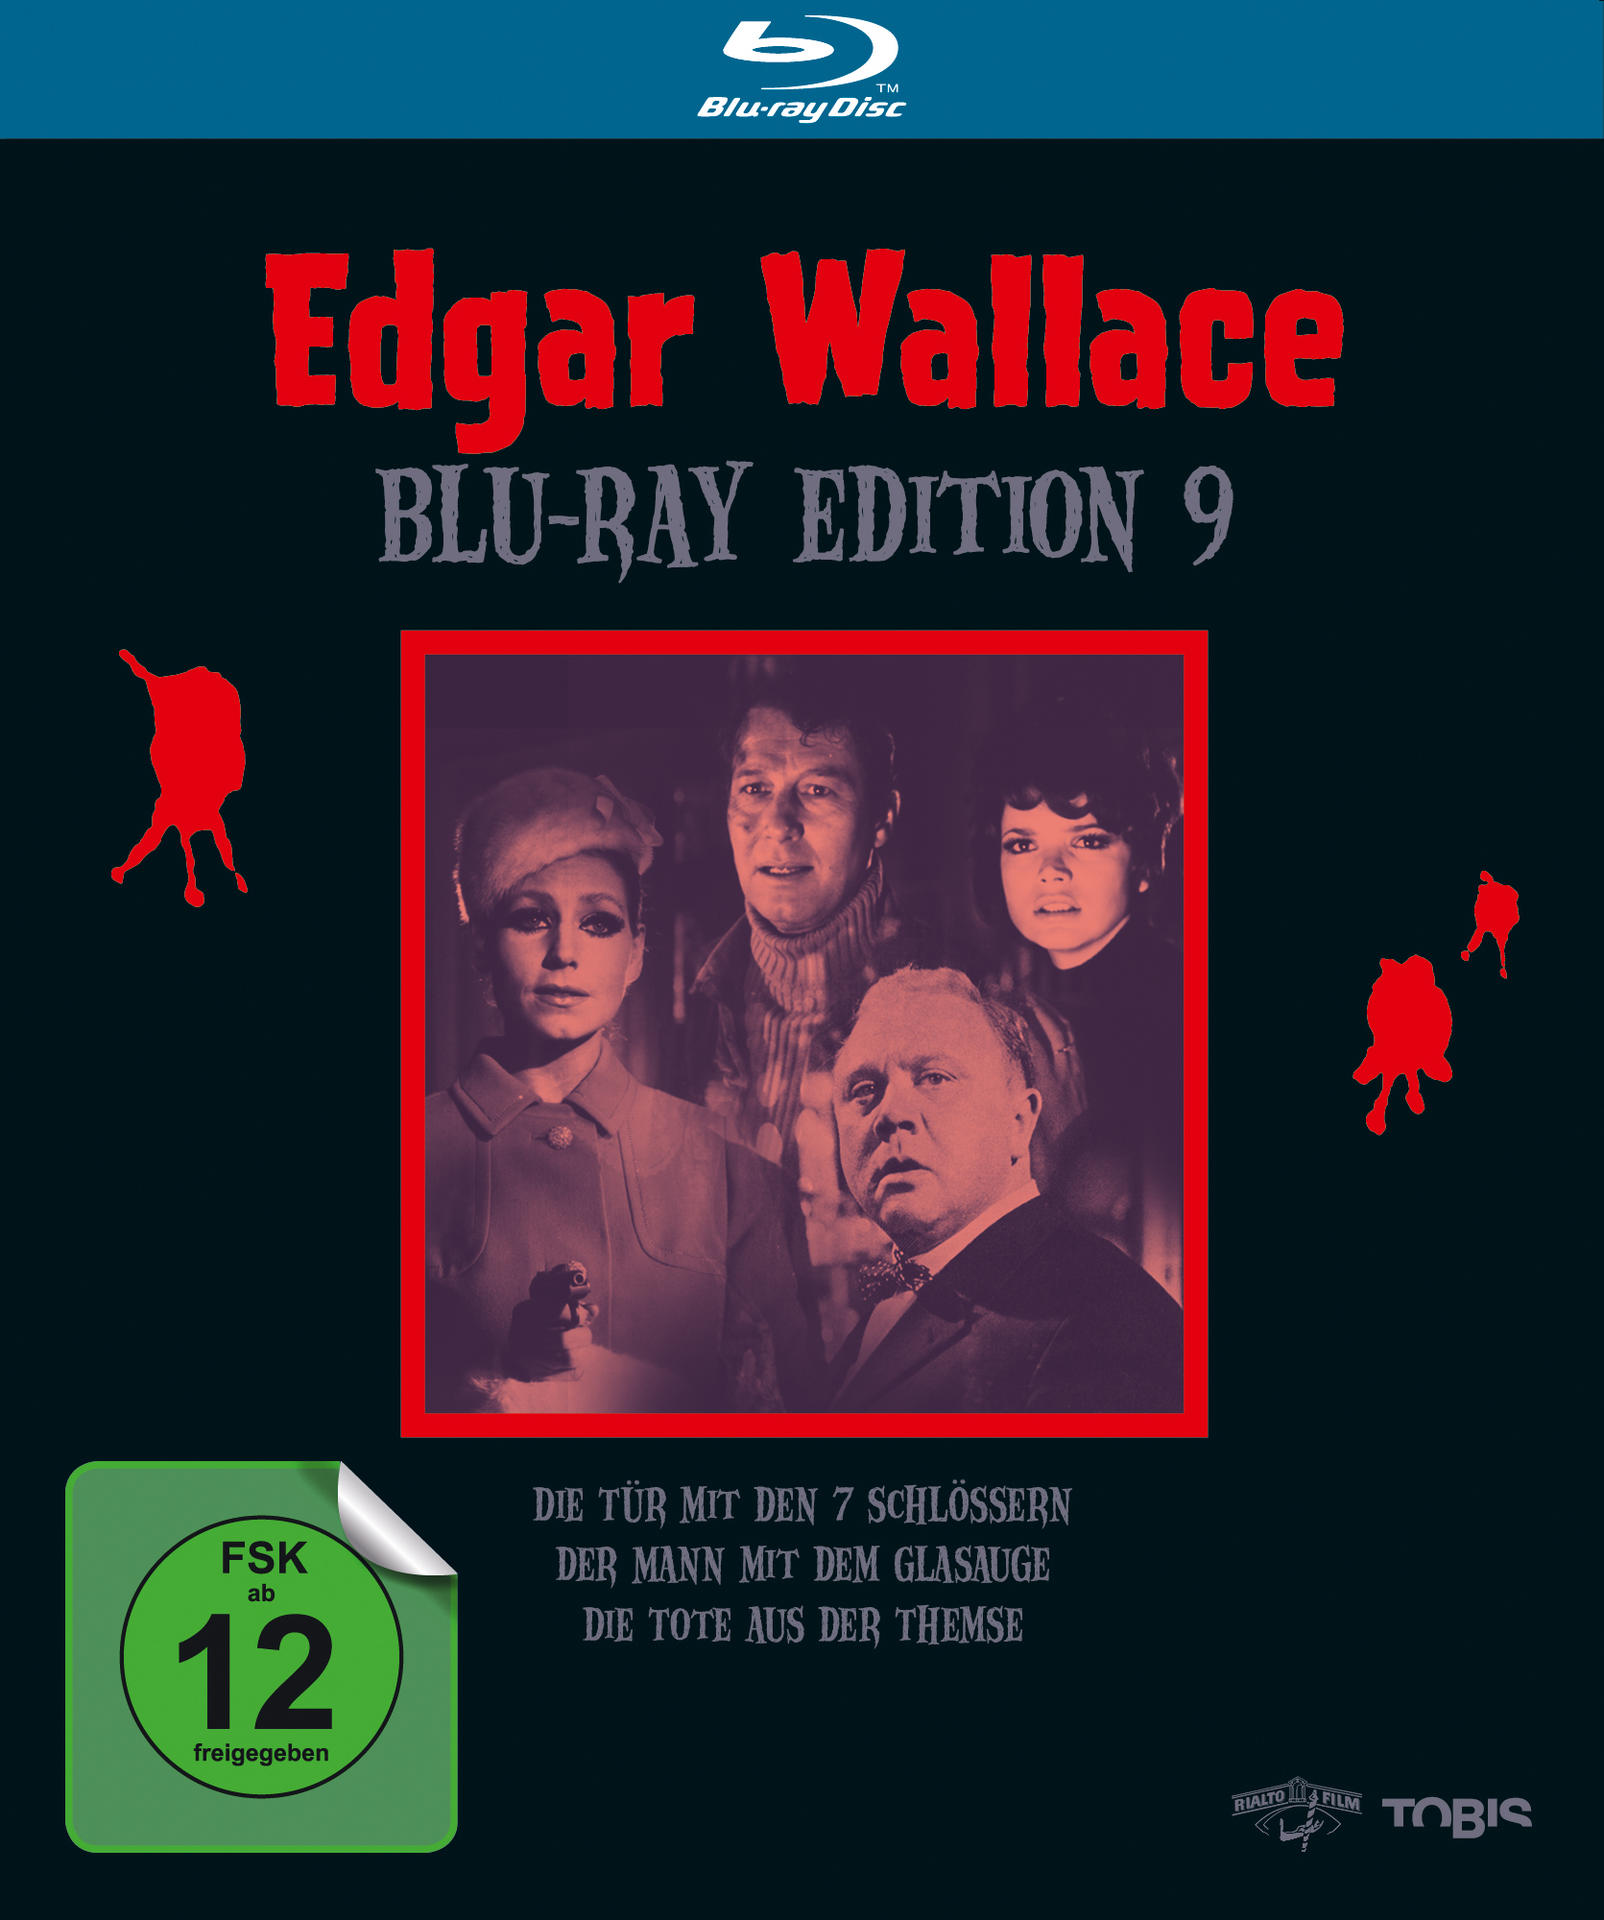 Wallace Edition Blu-ray Blu-ray 9 Edgar